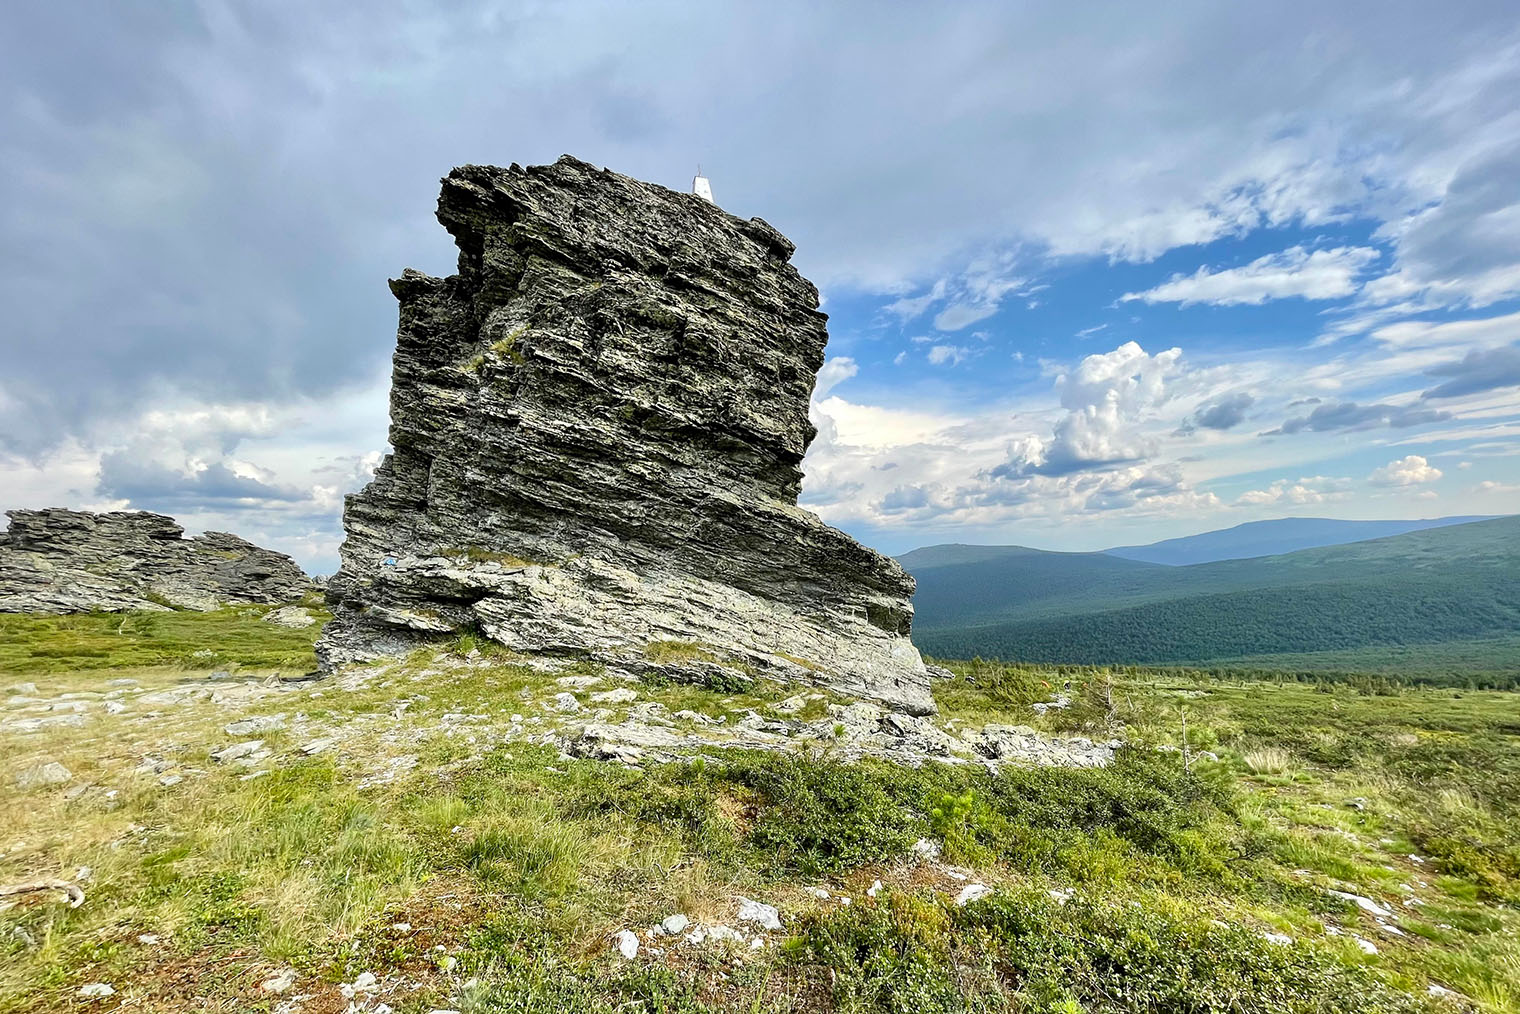 Перевал Дятлова. Фотография: Ovchinnikova Irina / Shutterstock / FOTODOM